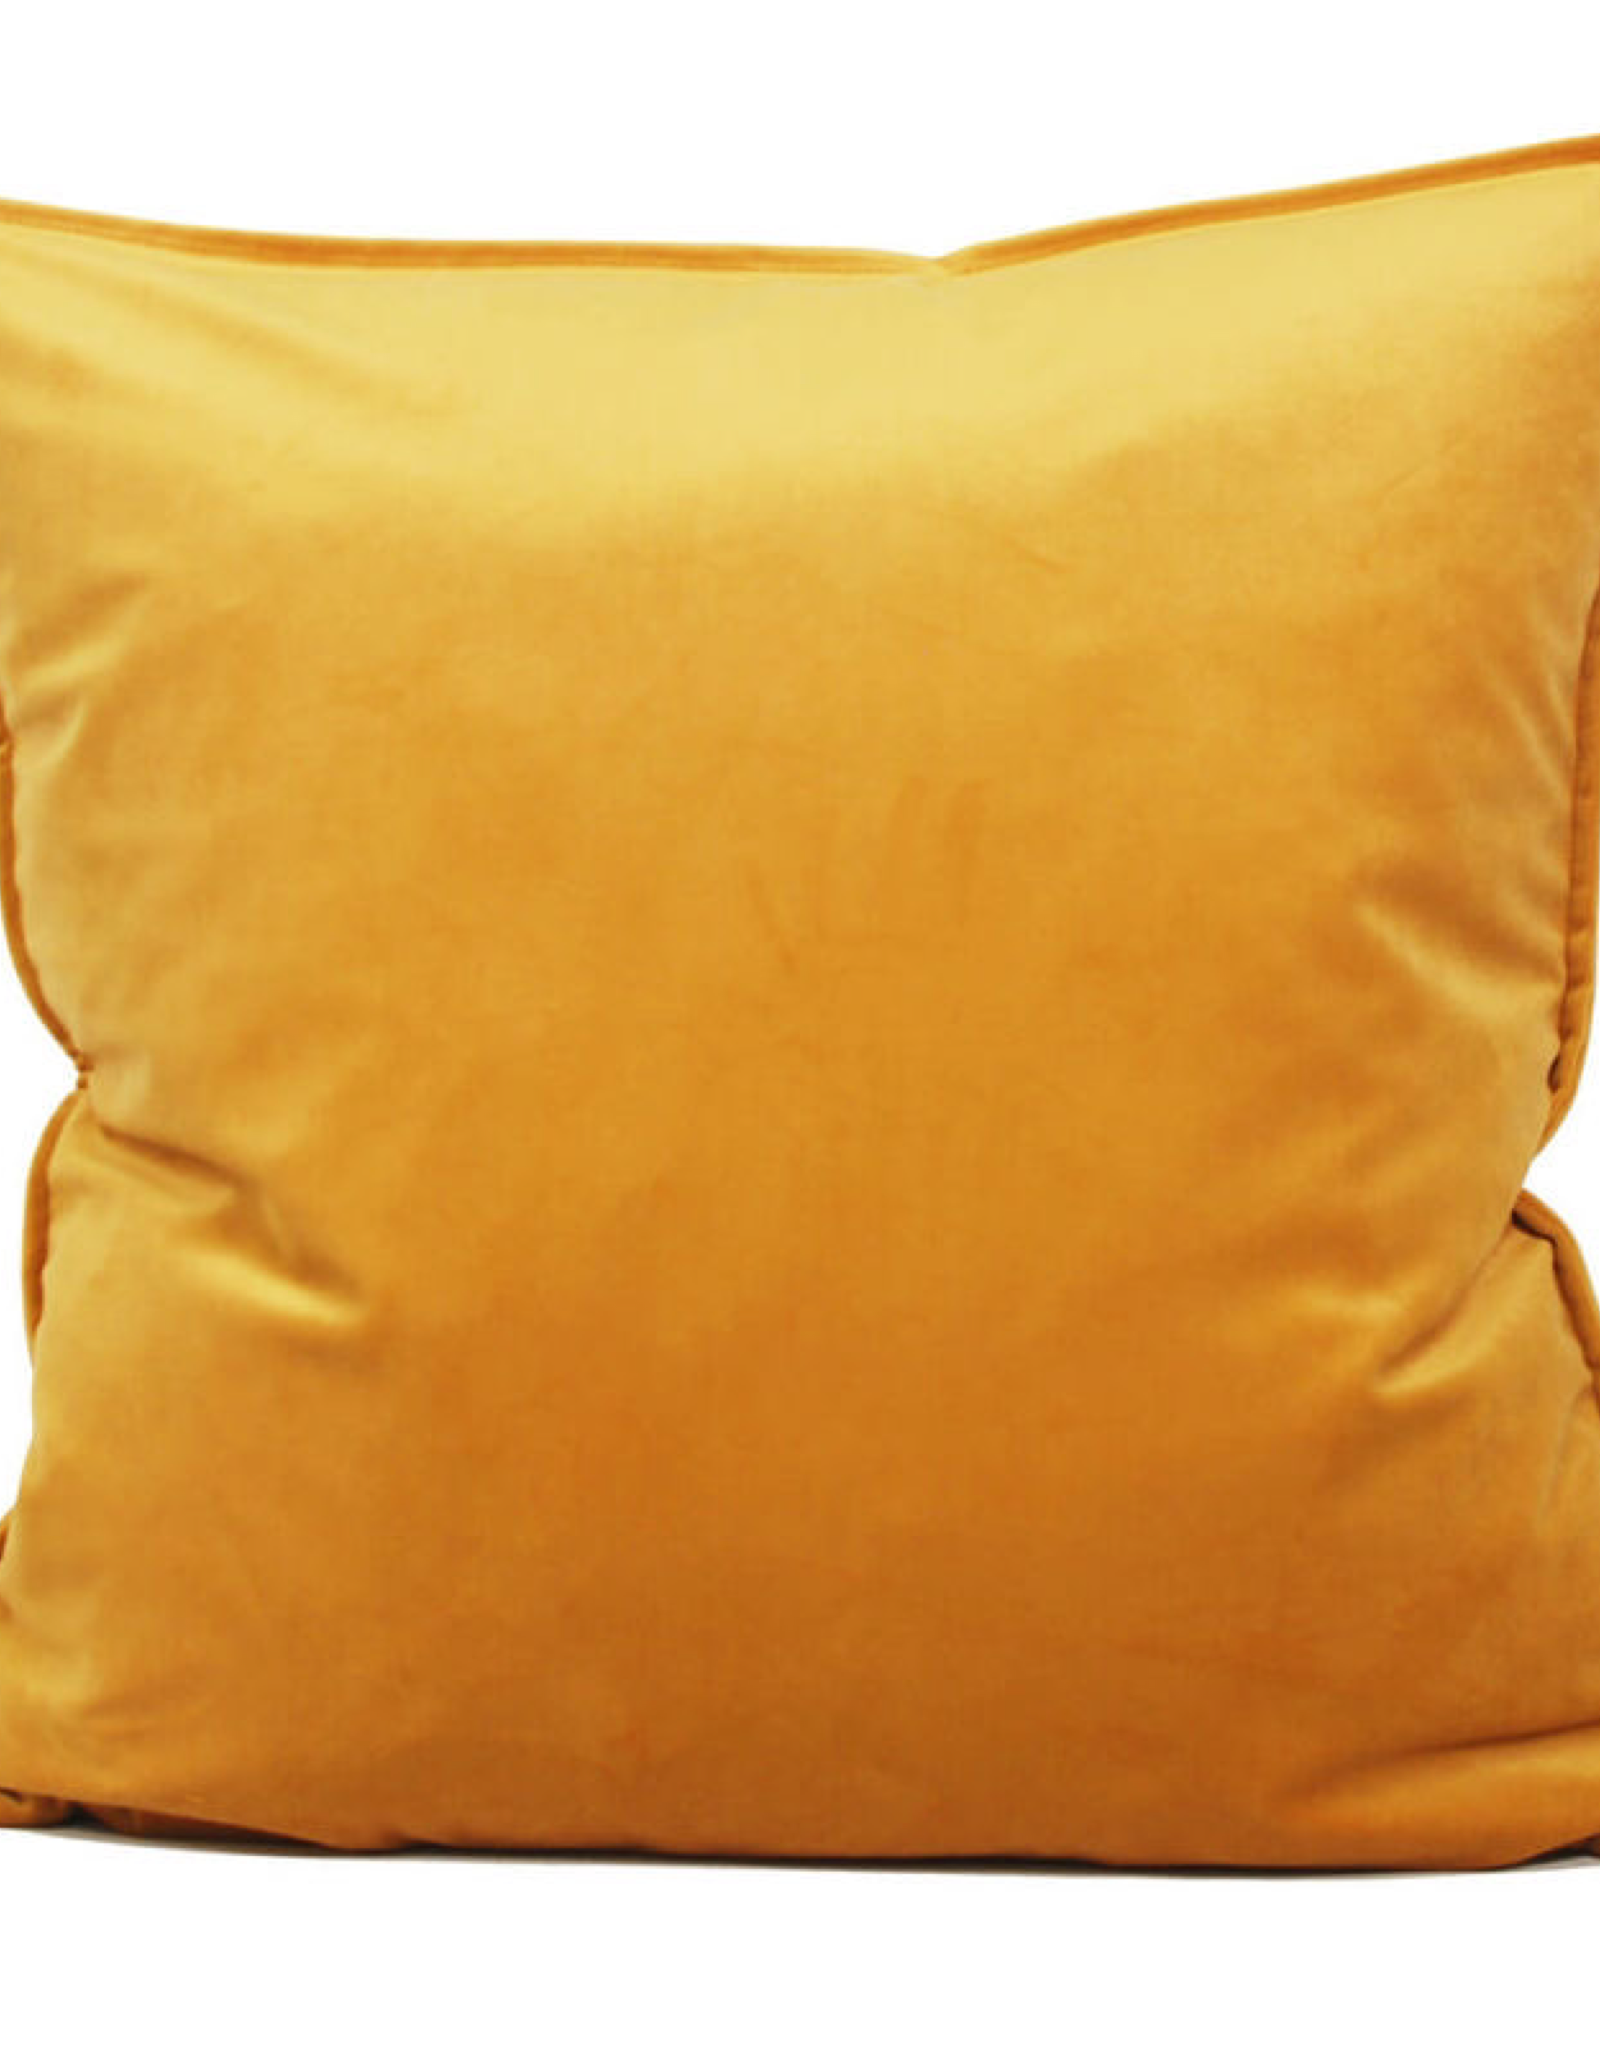 Daniadown Cushions Daniadown Dutch Velvet Mustard Toss 18 x 18